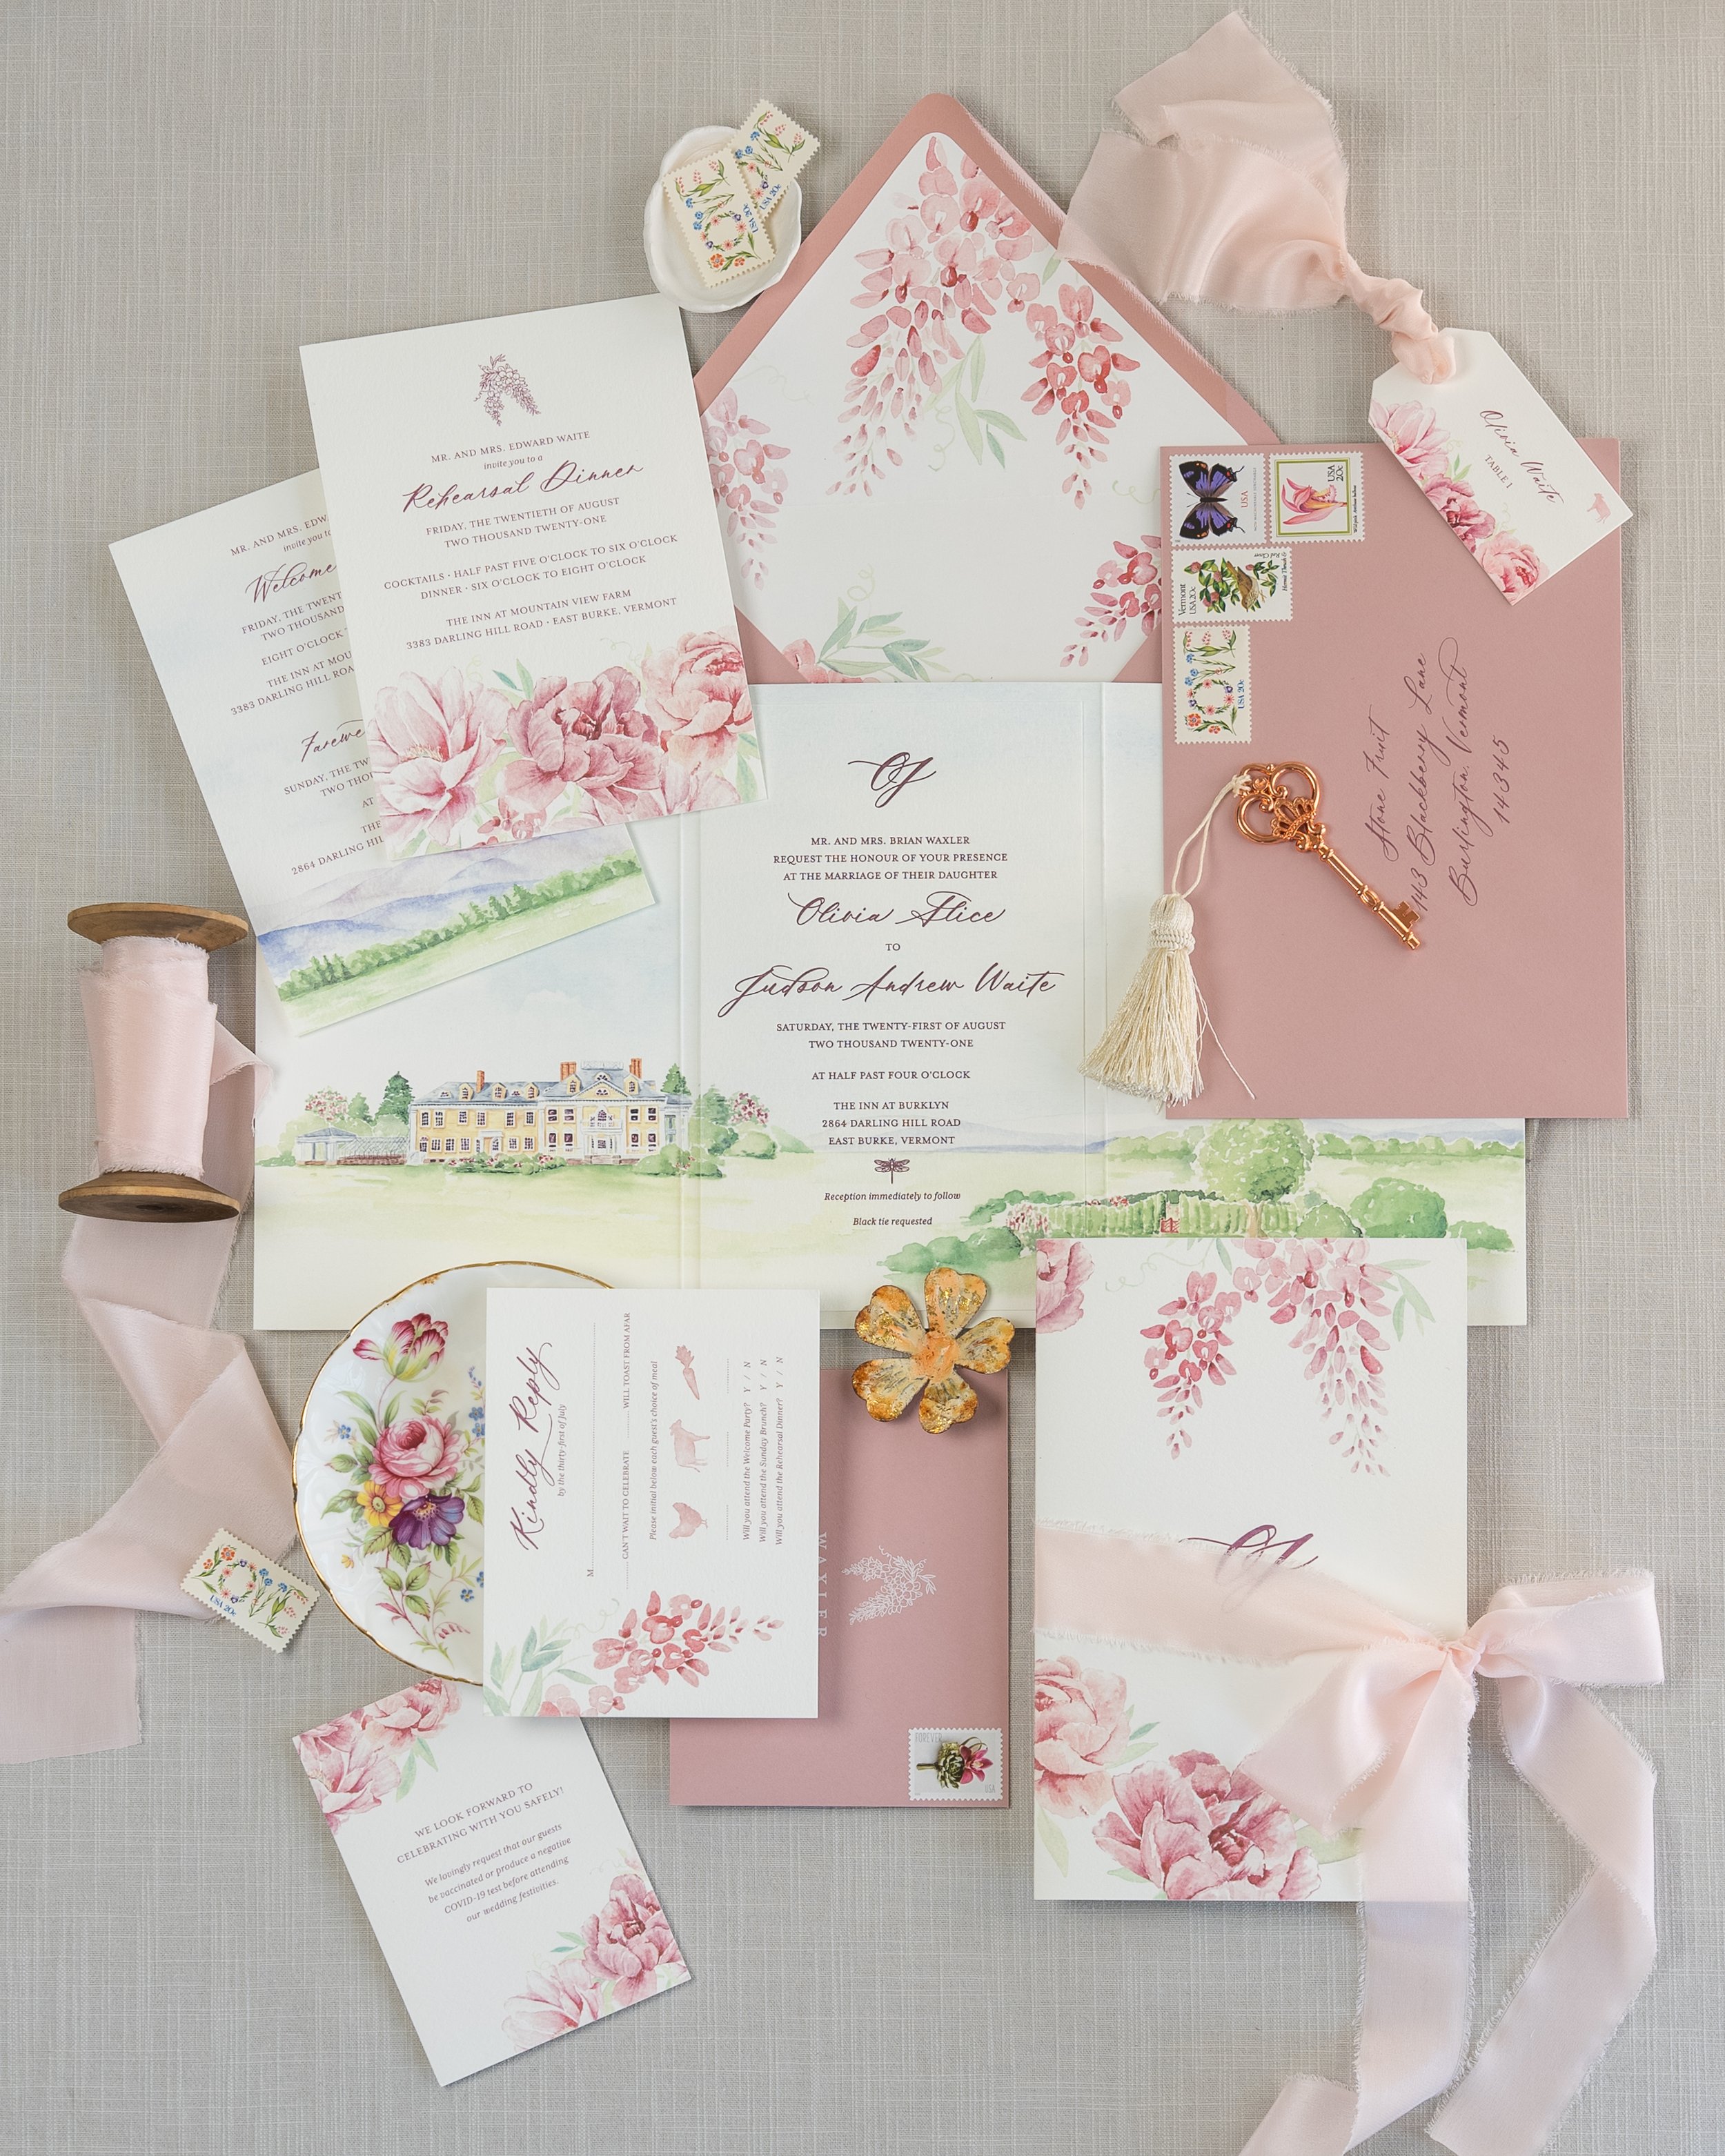 stone-fruit-watercolor-floral-invitations-inn-burklyn-vermont.jpg